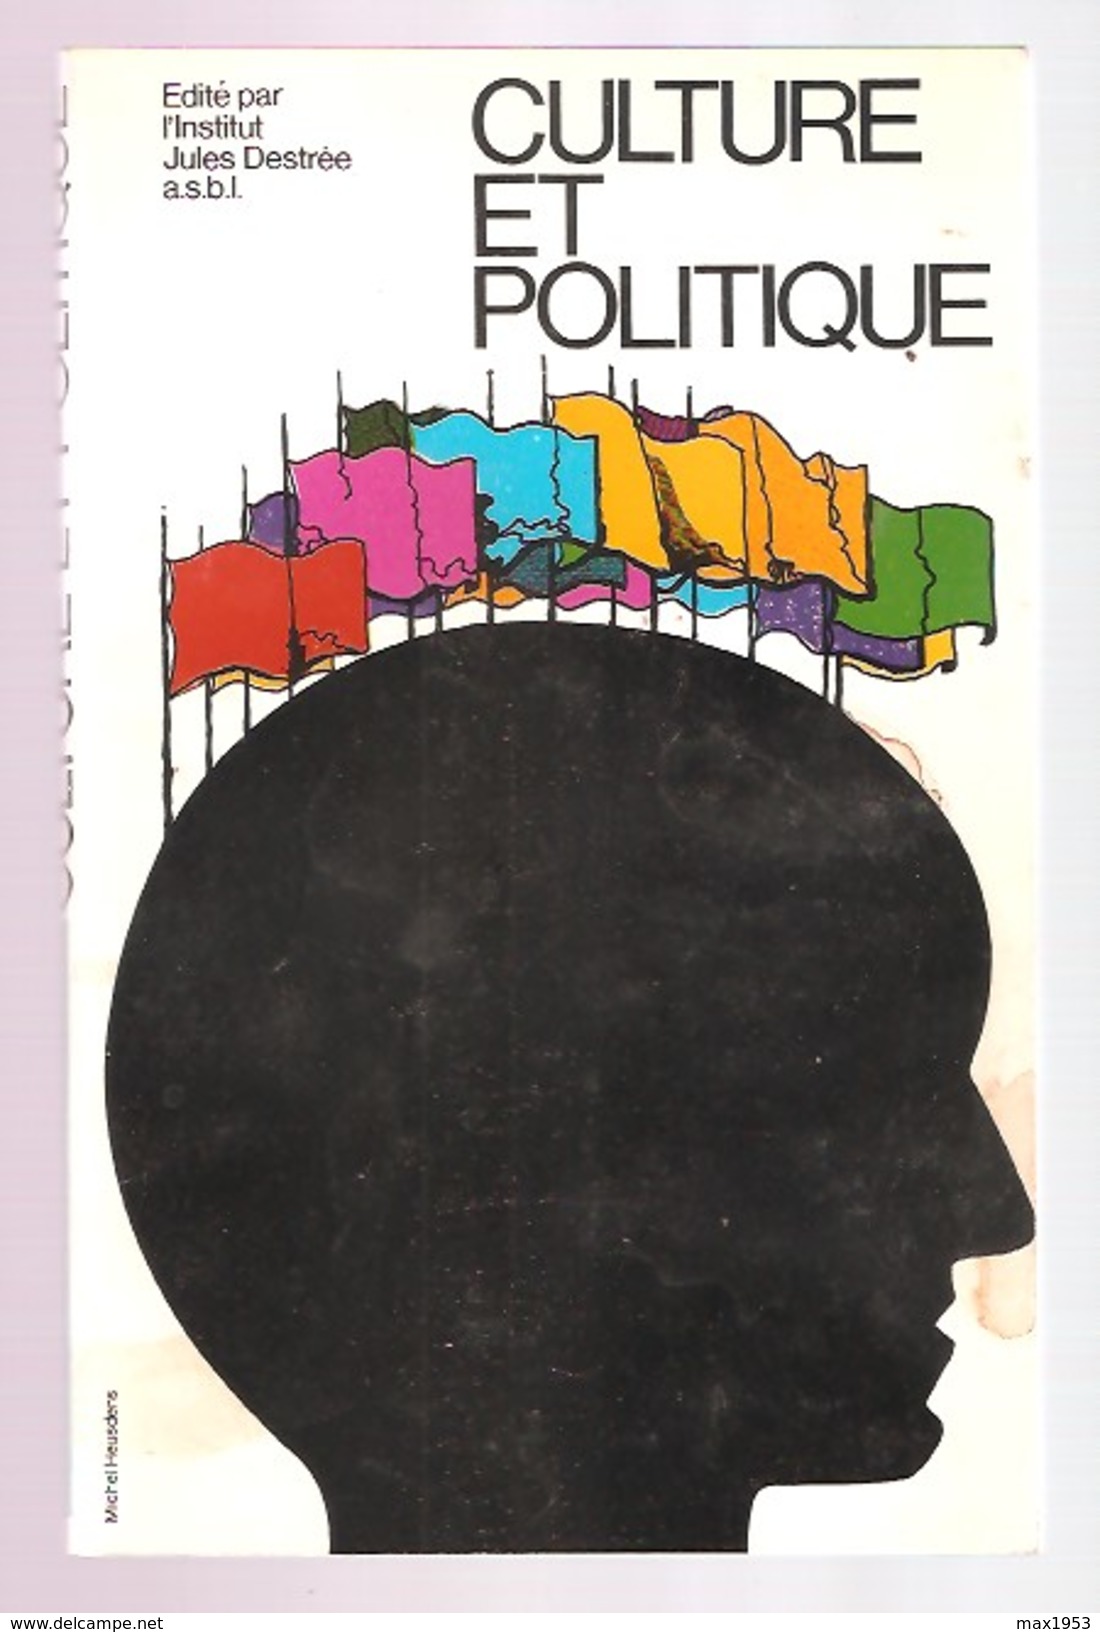 CULTURE ET POLITIQUE - Institut Jules Destrée , 1984 - Belgium